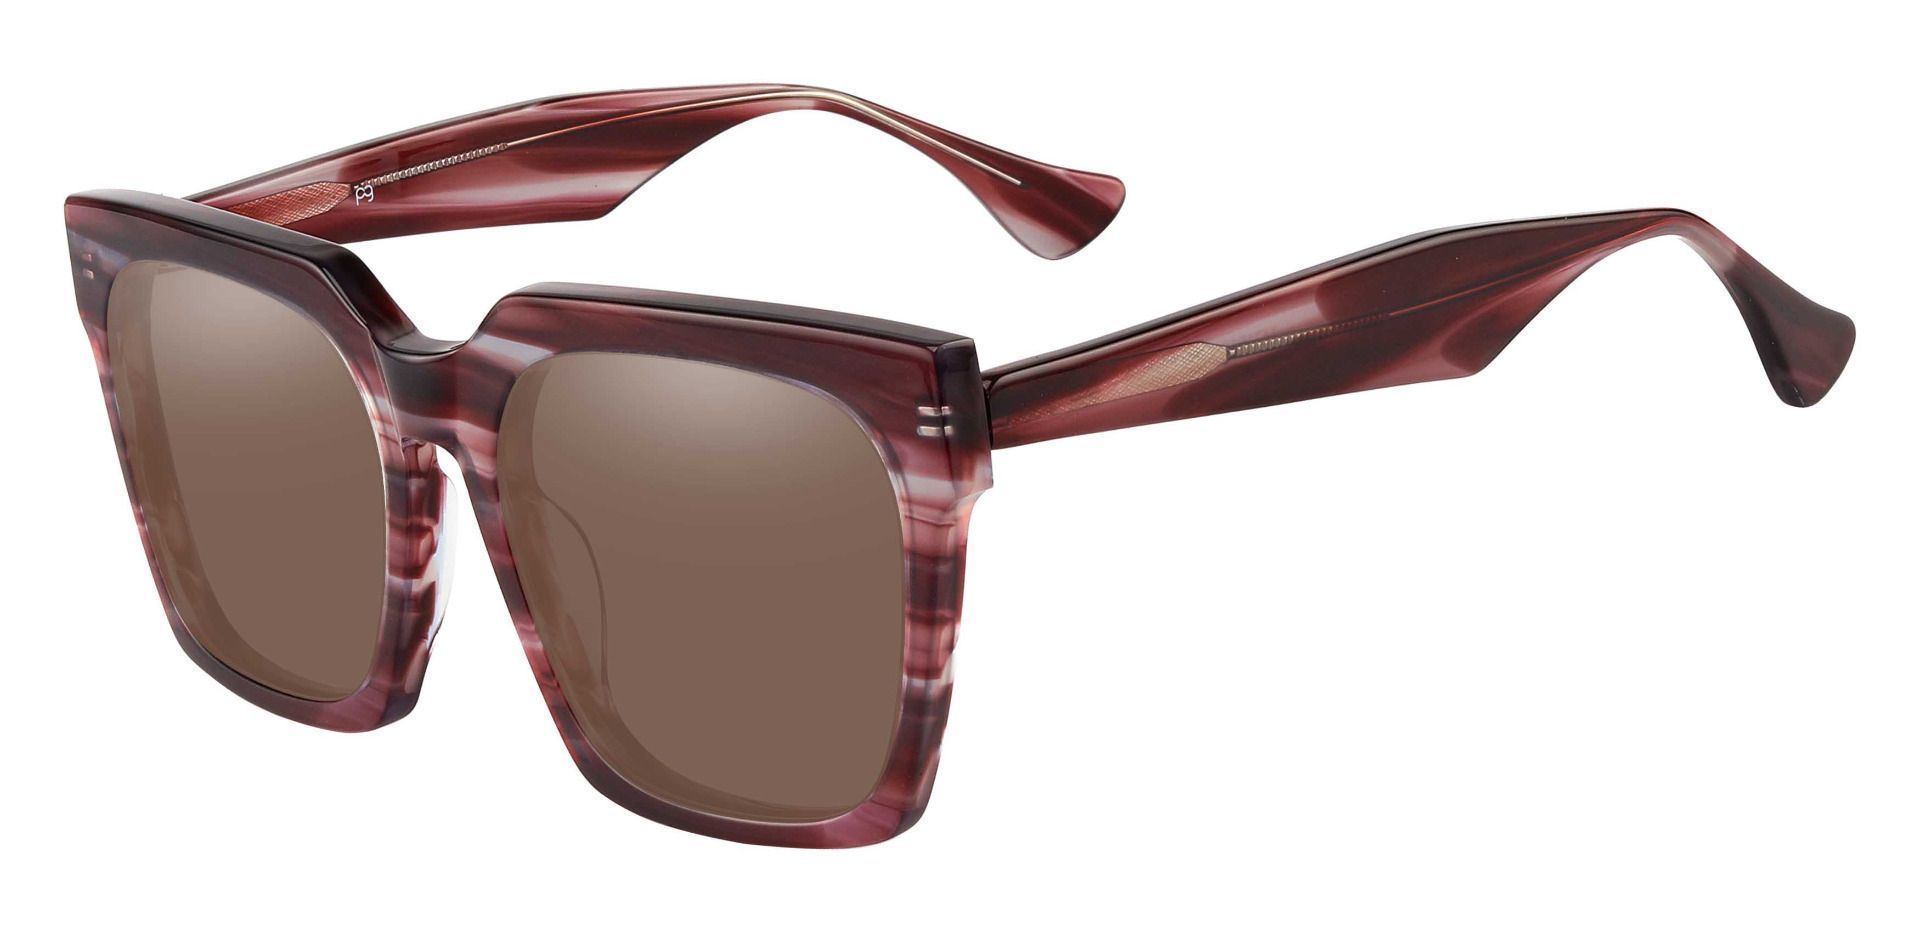 Harlan Square Progressive Sunglasses - Striped Frame With Brown Lenses